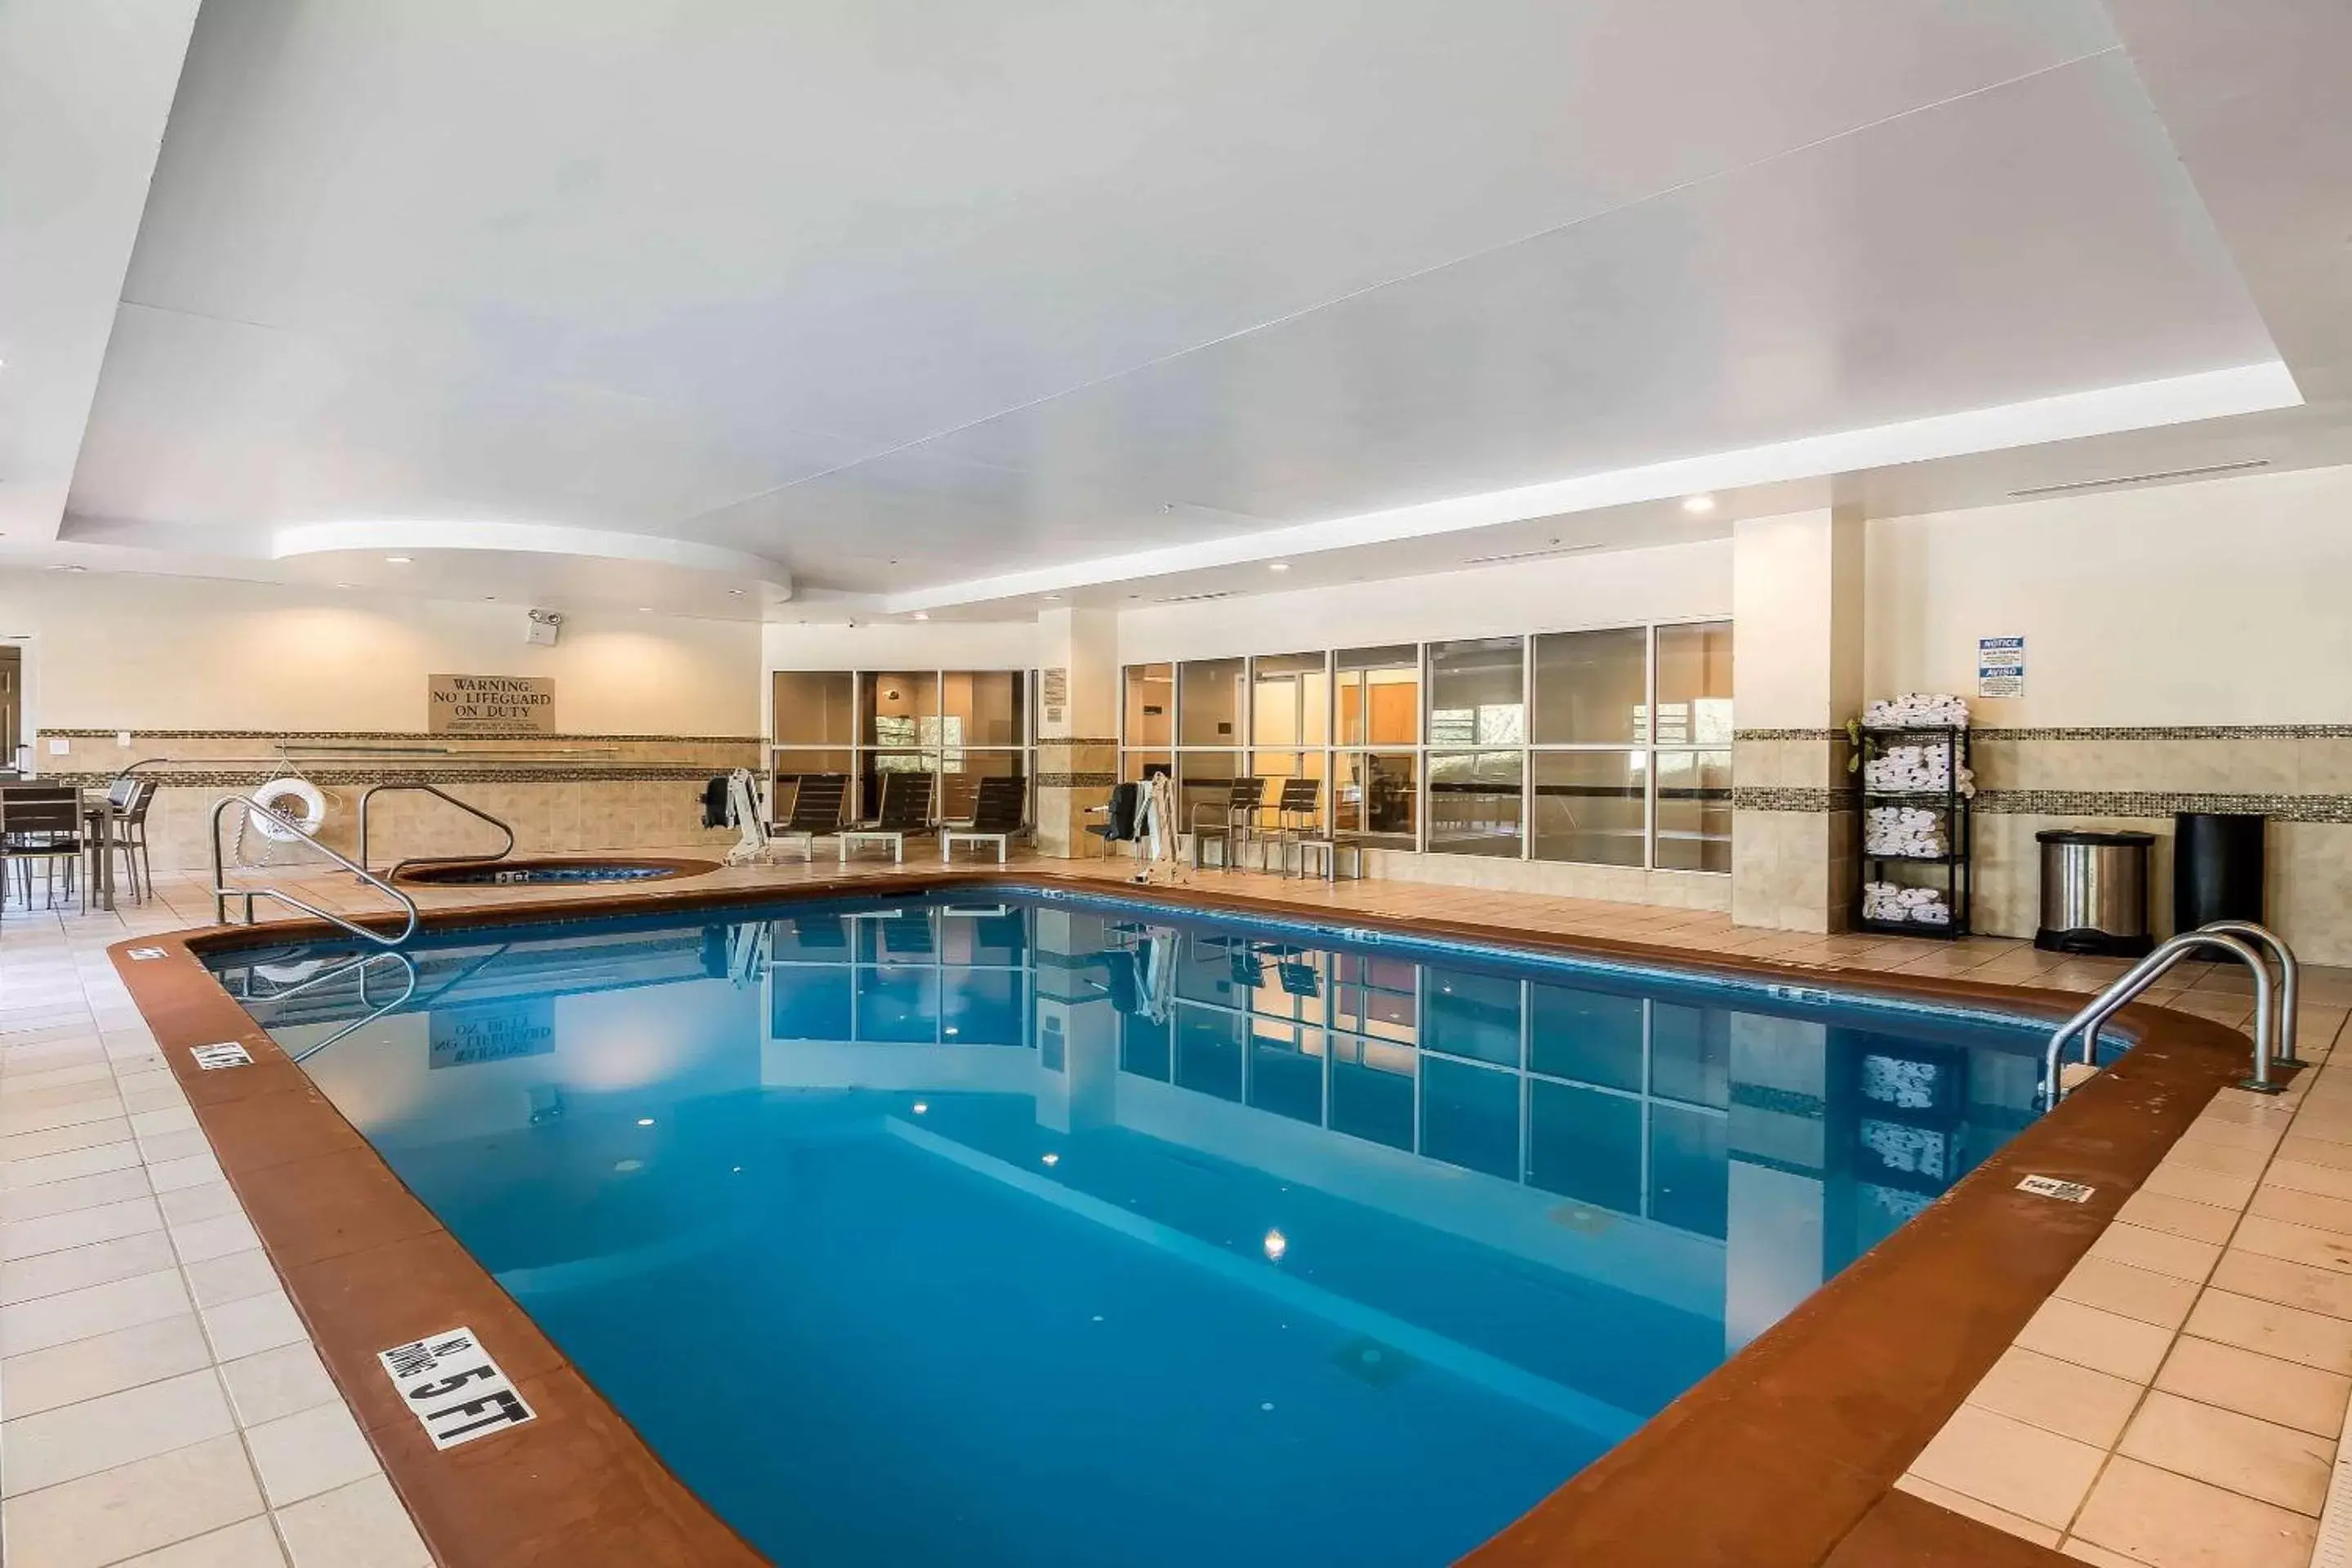 Swimming Pool in Comfort Inn & Suites near Six Flags